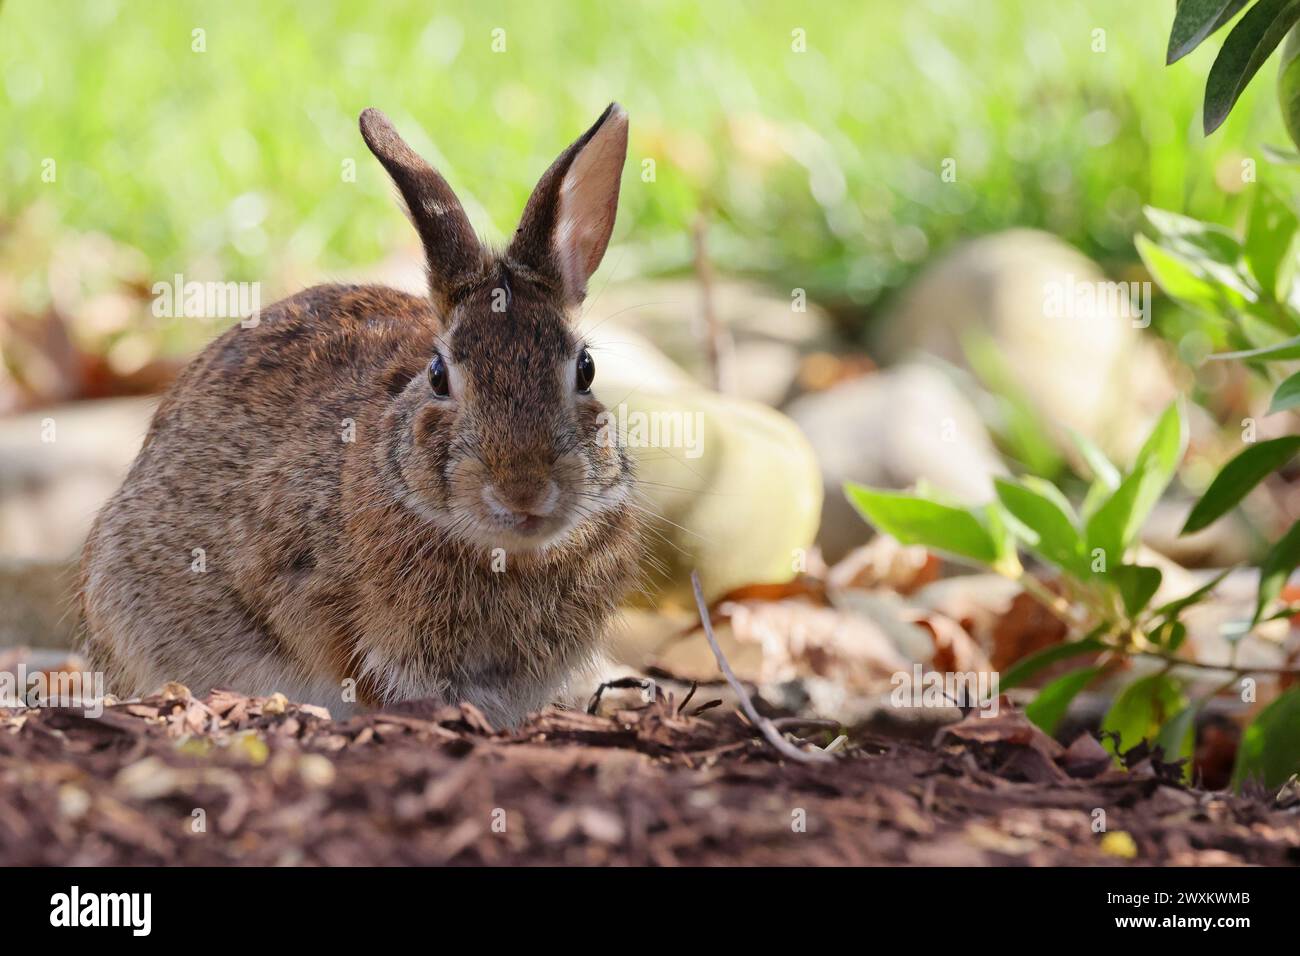 A bunny in a sunny garden with green grass Stock Photo